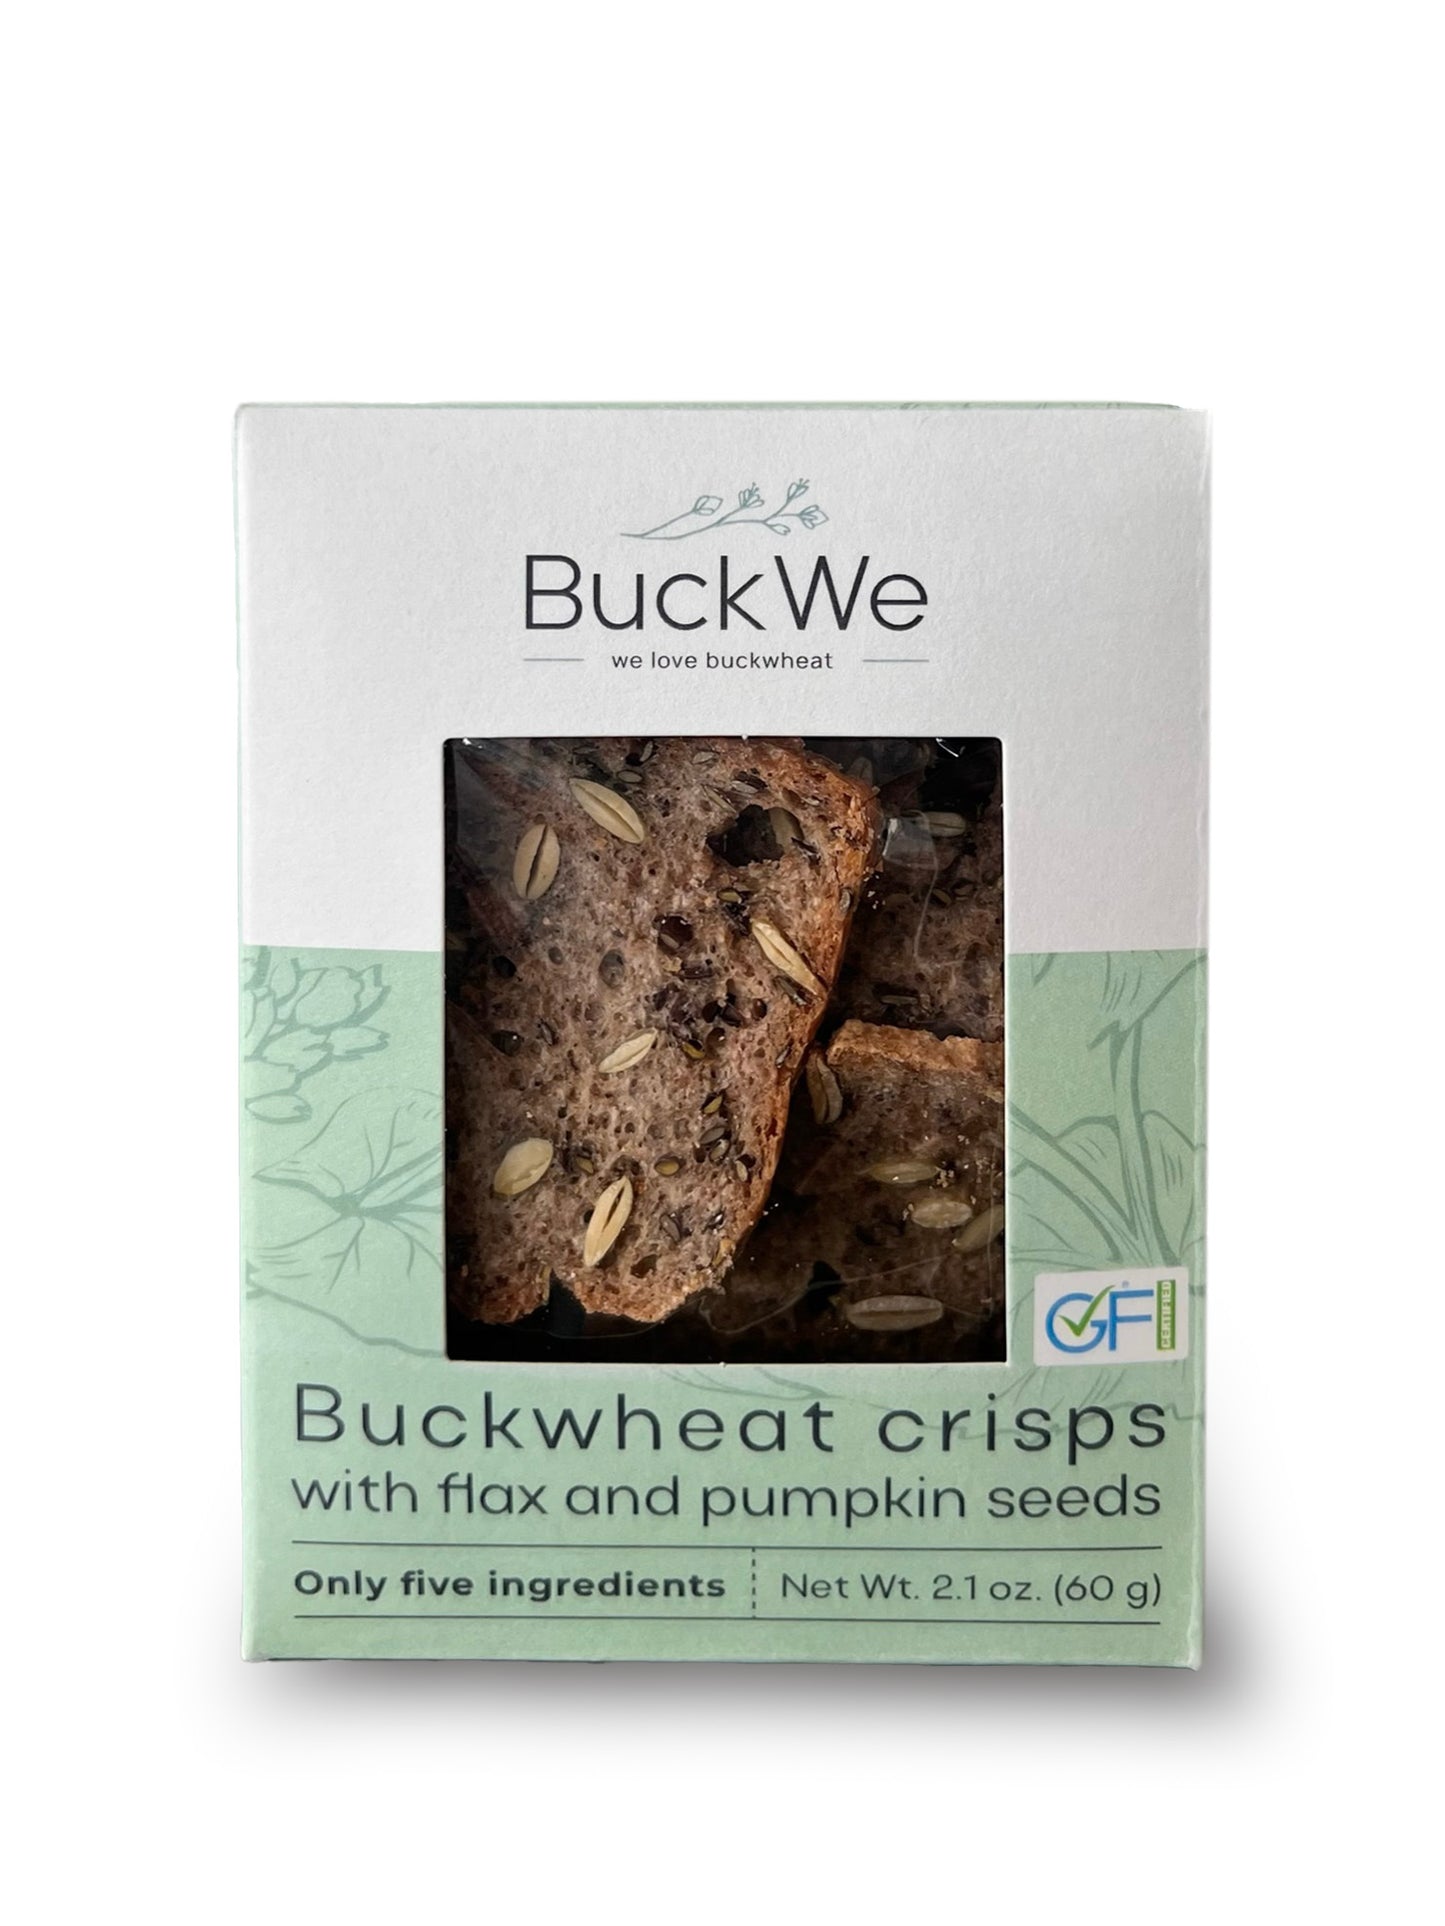 Buckwheat crisps with flaxseeds and pumpkin seeds